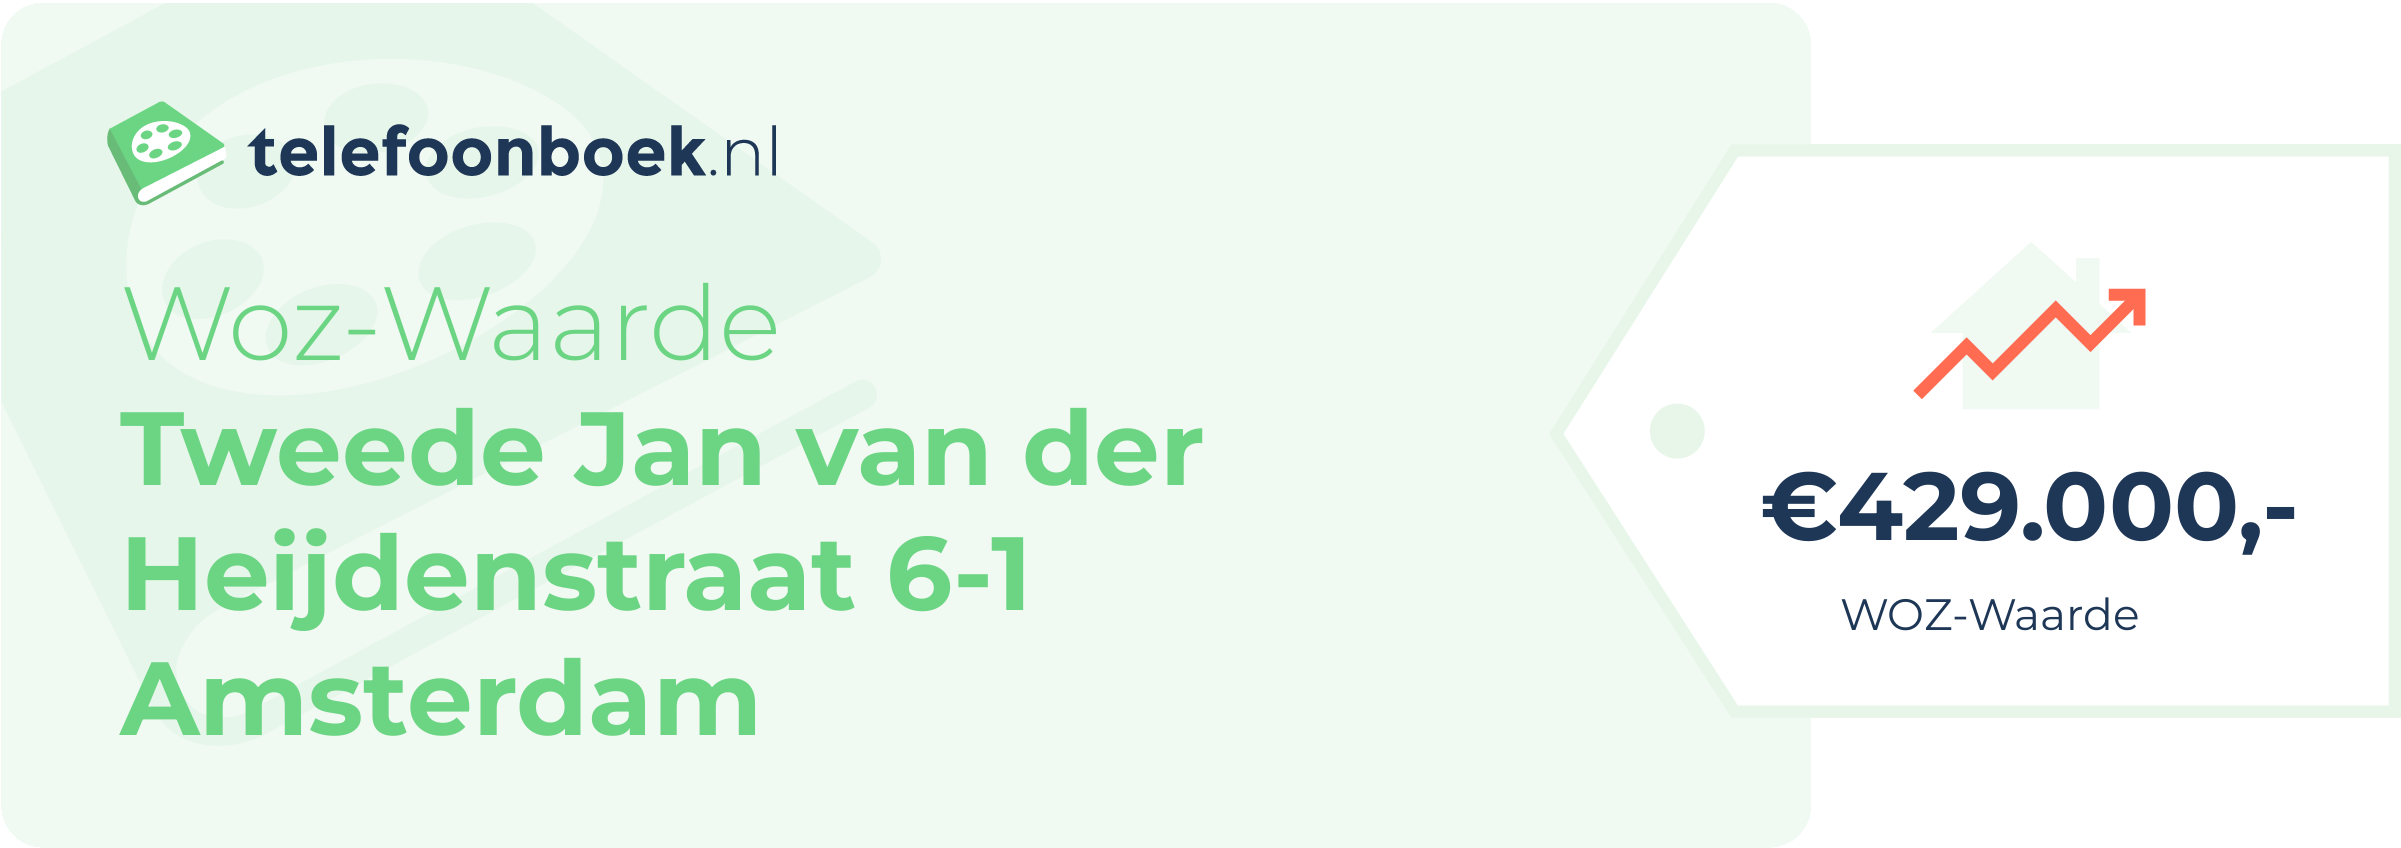 WOZ-waarde Tweede Jan Van Der Heijdenstraat 6-1 Amsterdam